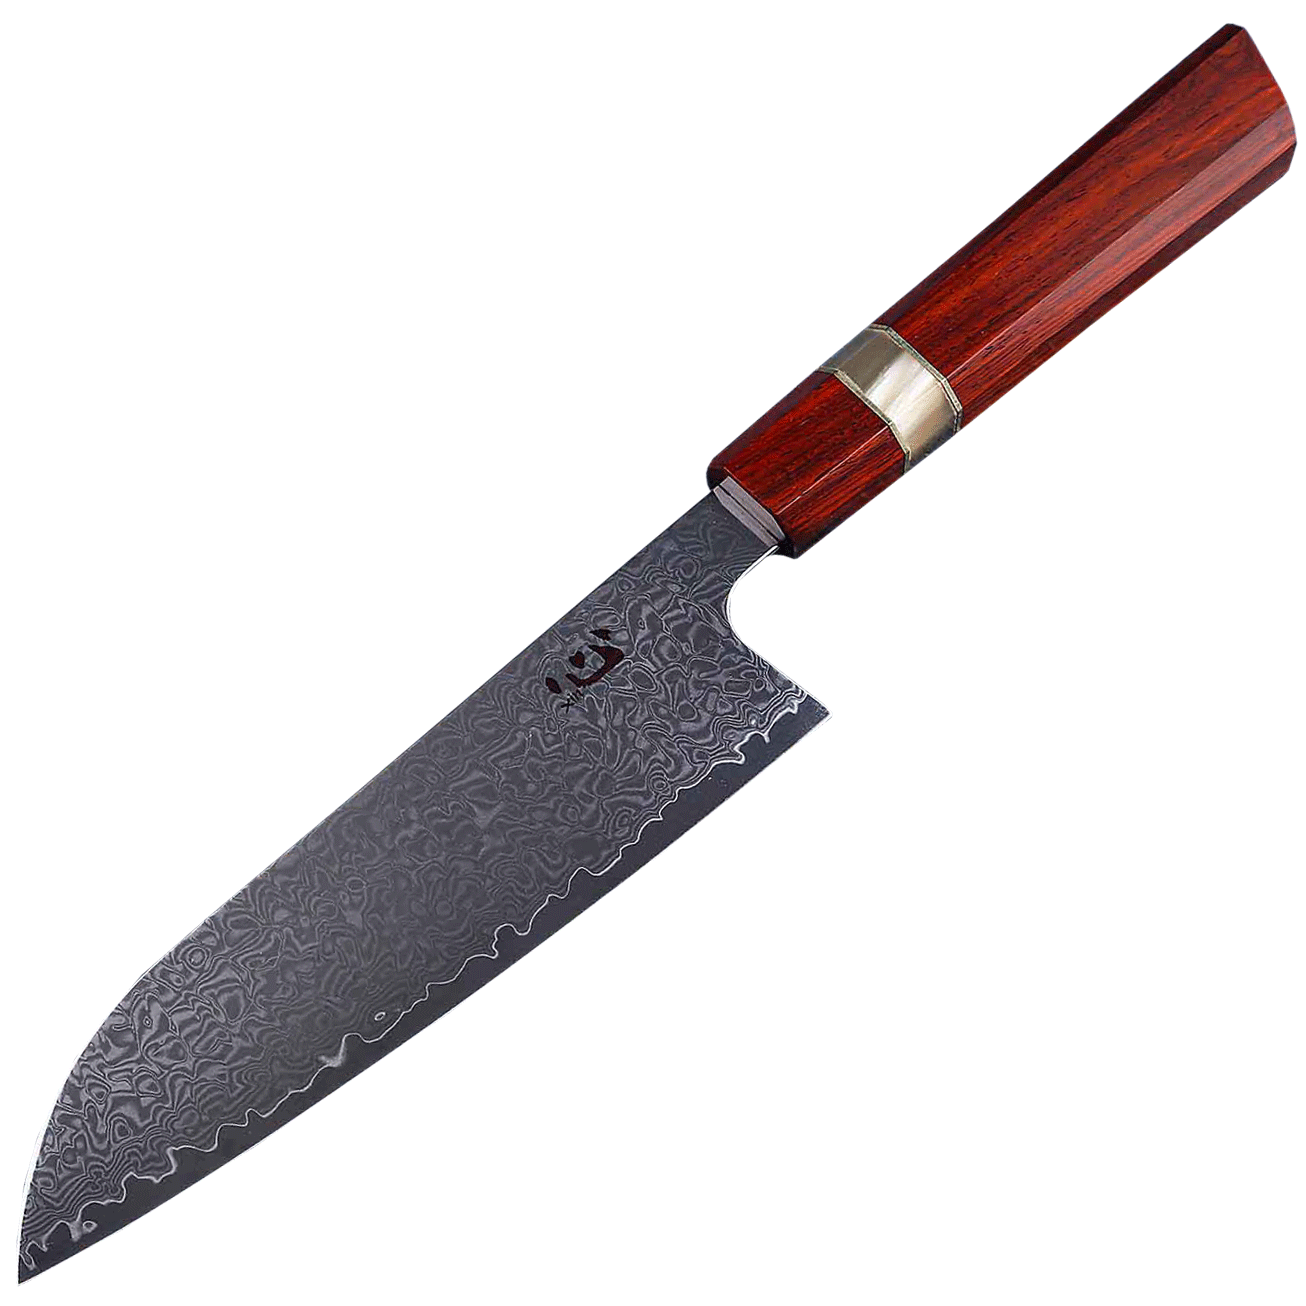 Нож кухонный Xin Cutlery Santoku XC122 193мм, сталь VG-10, рукоять дерево палисандр